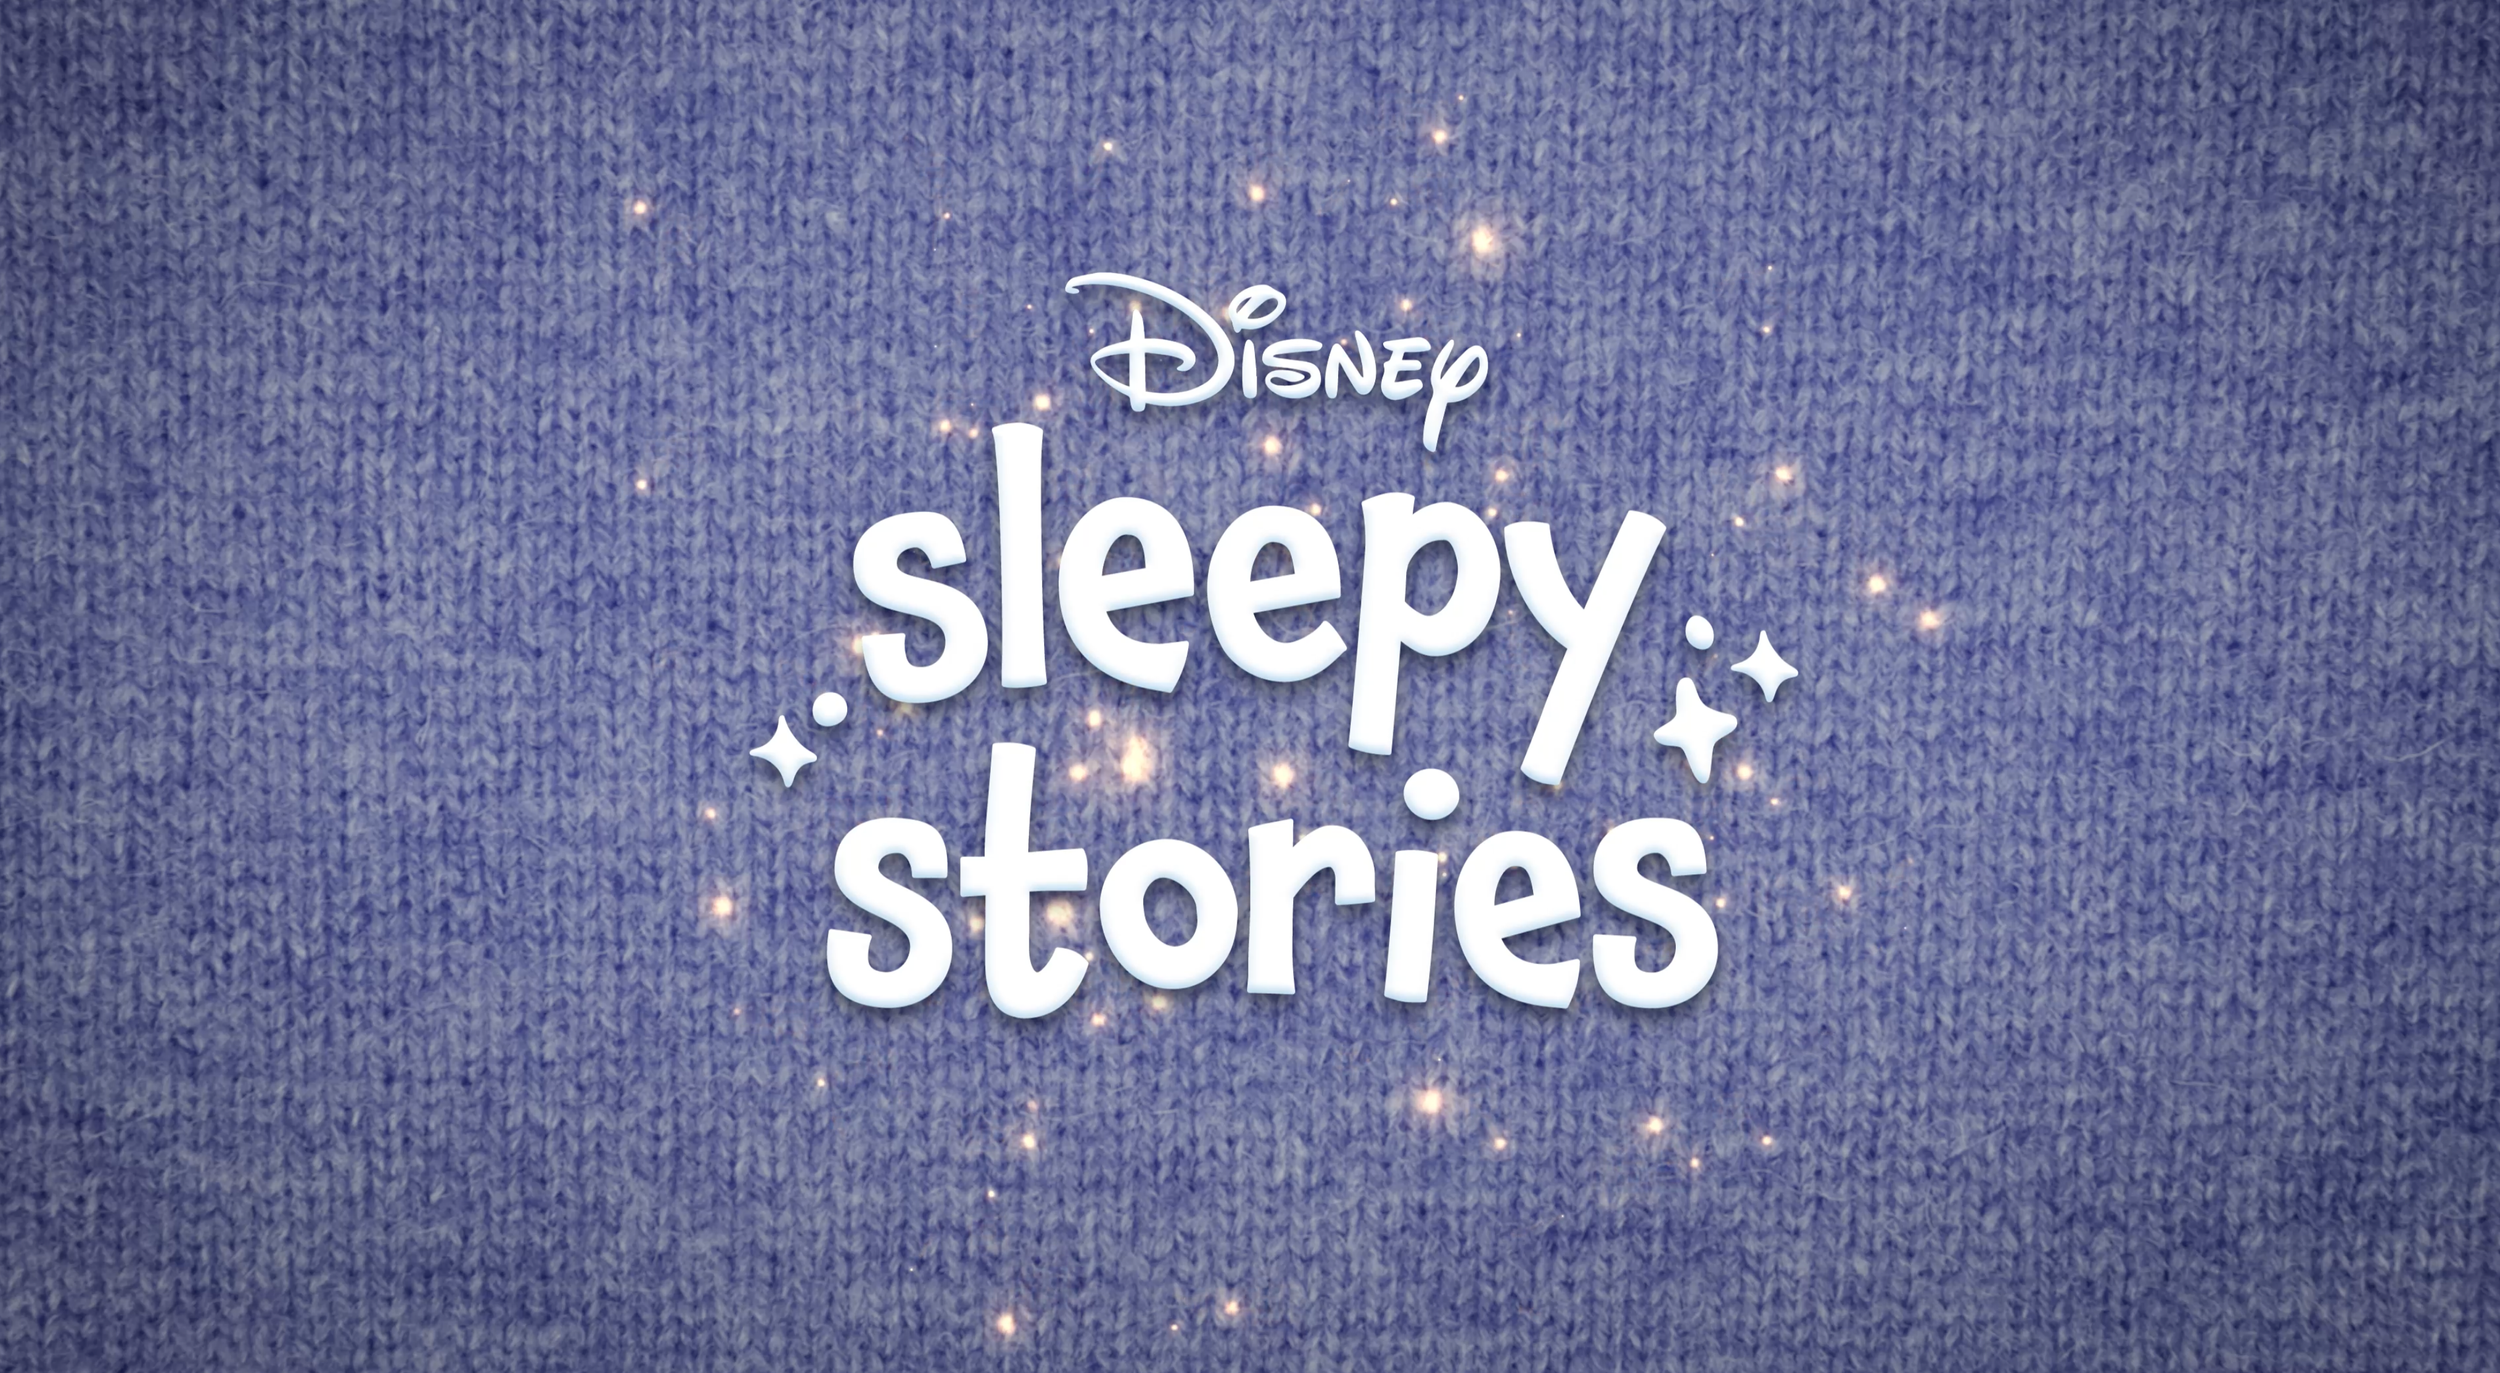 SLEEPY STORIES - DISNEY+